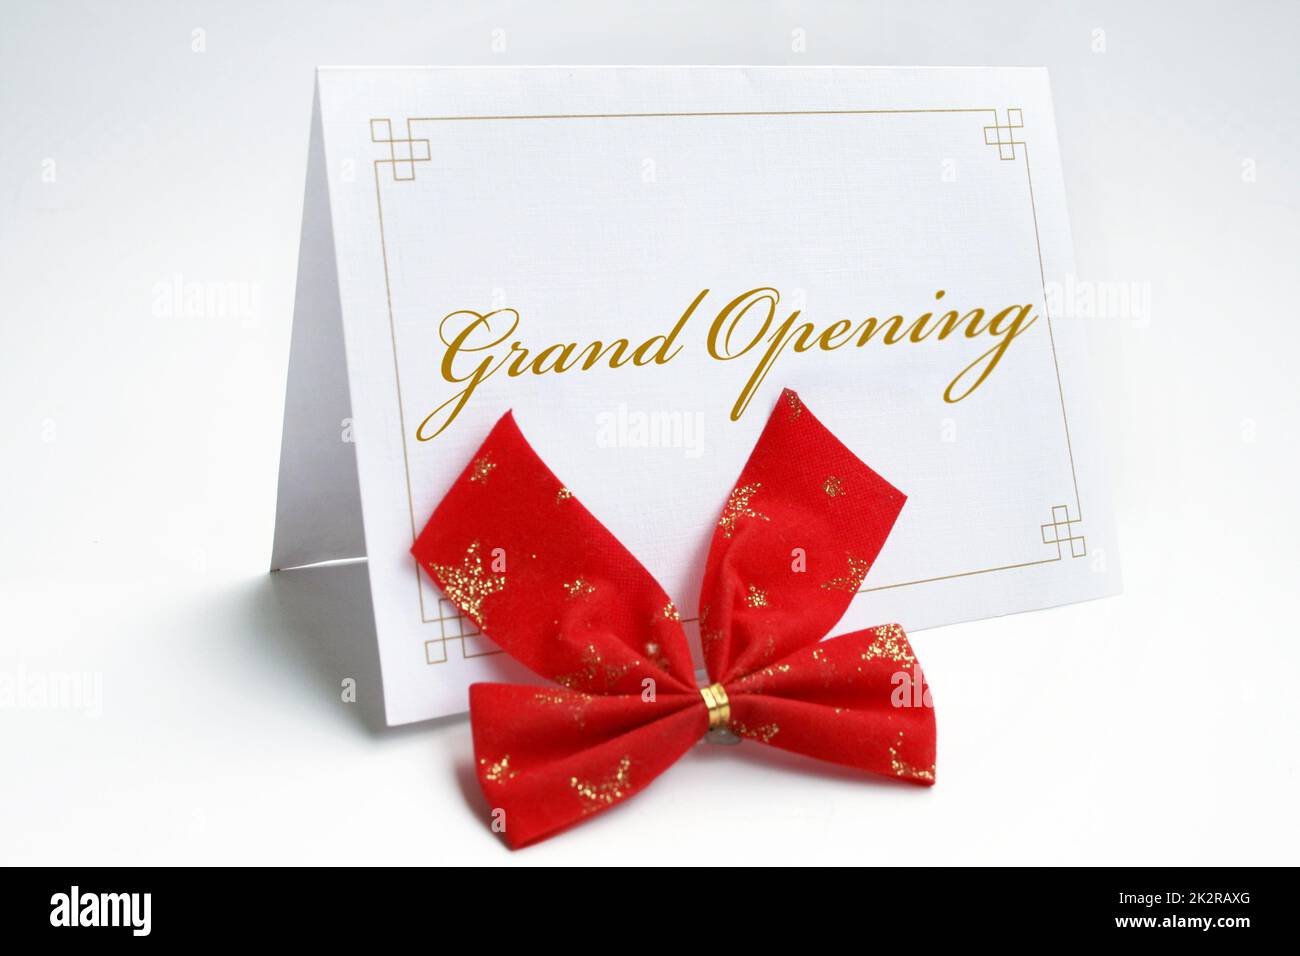 Einladung-Grand opening Stockfoto